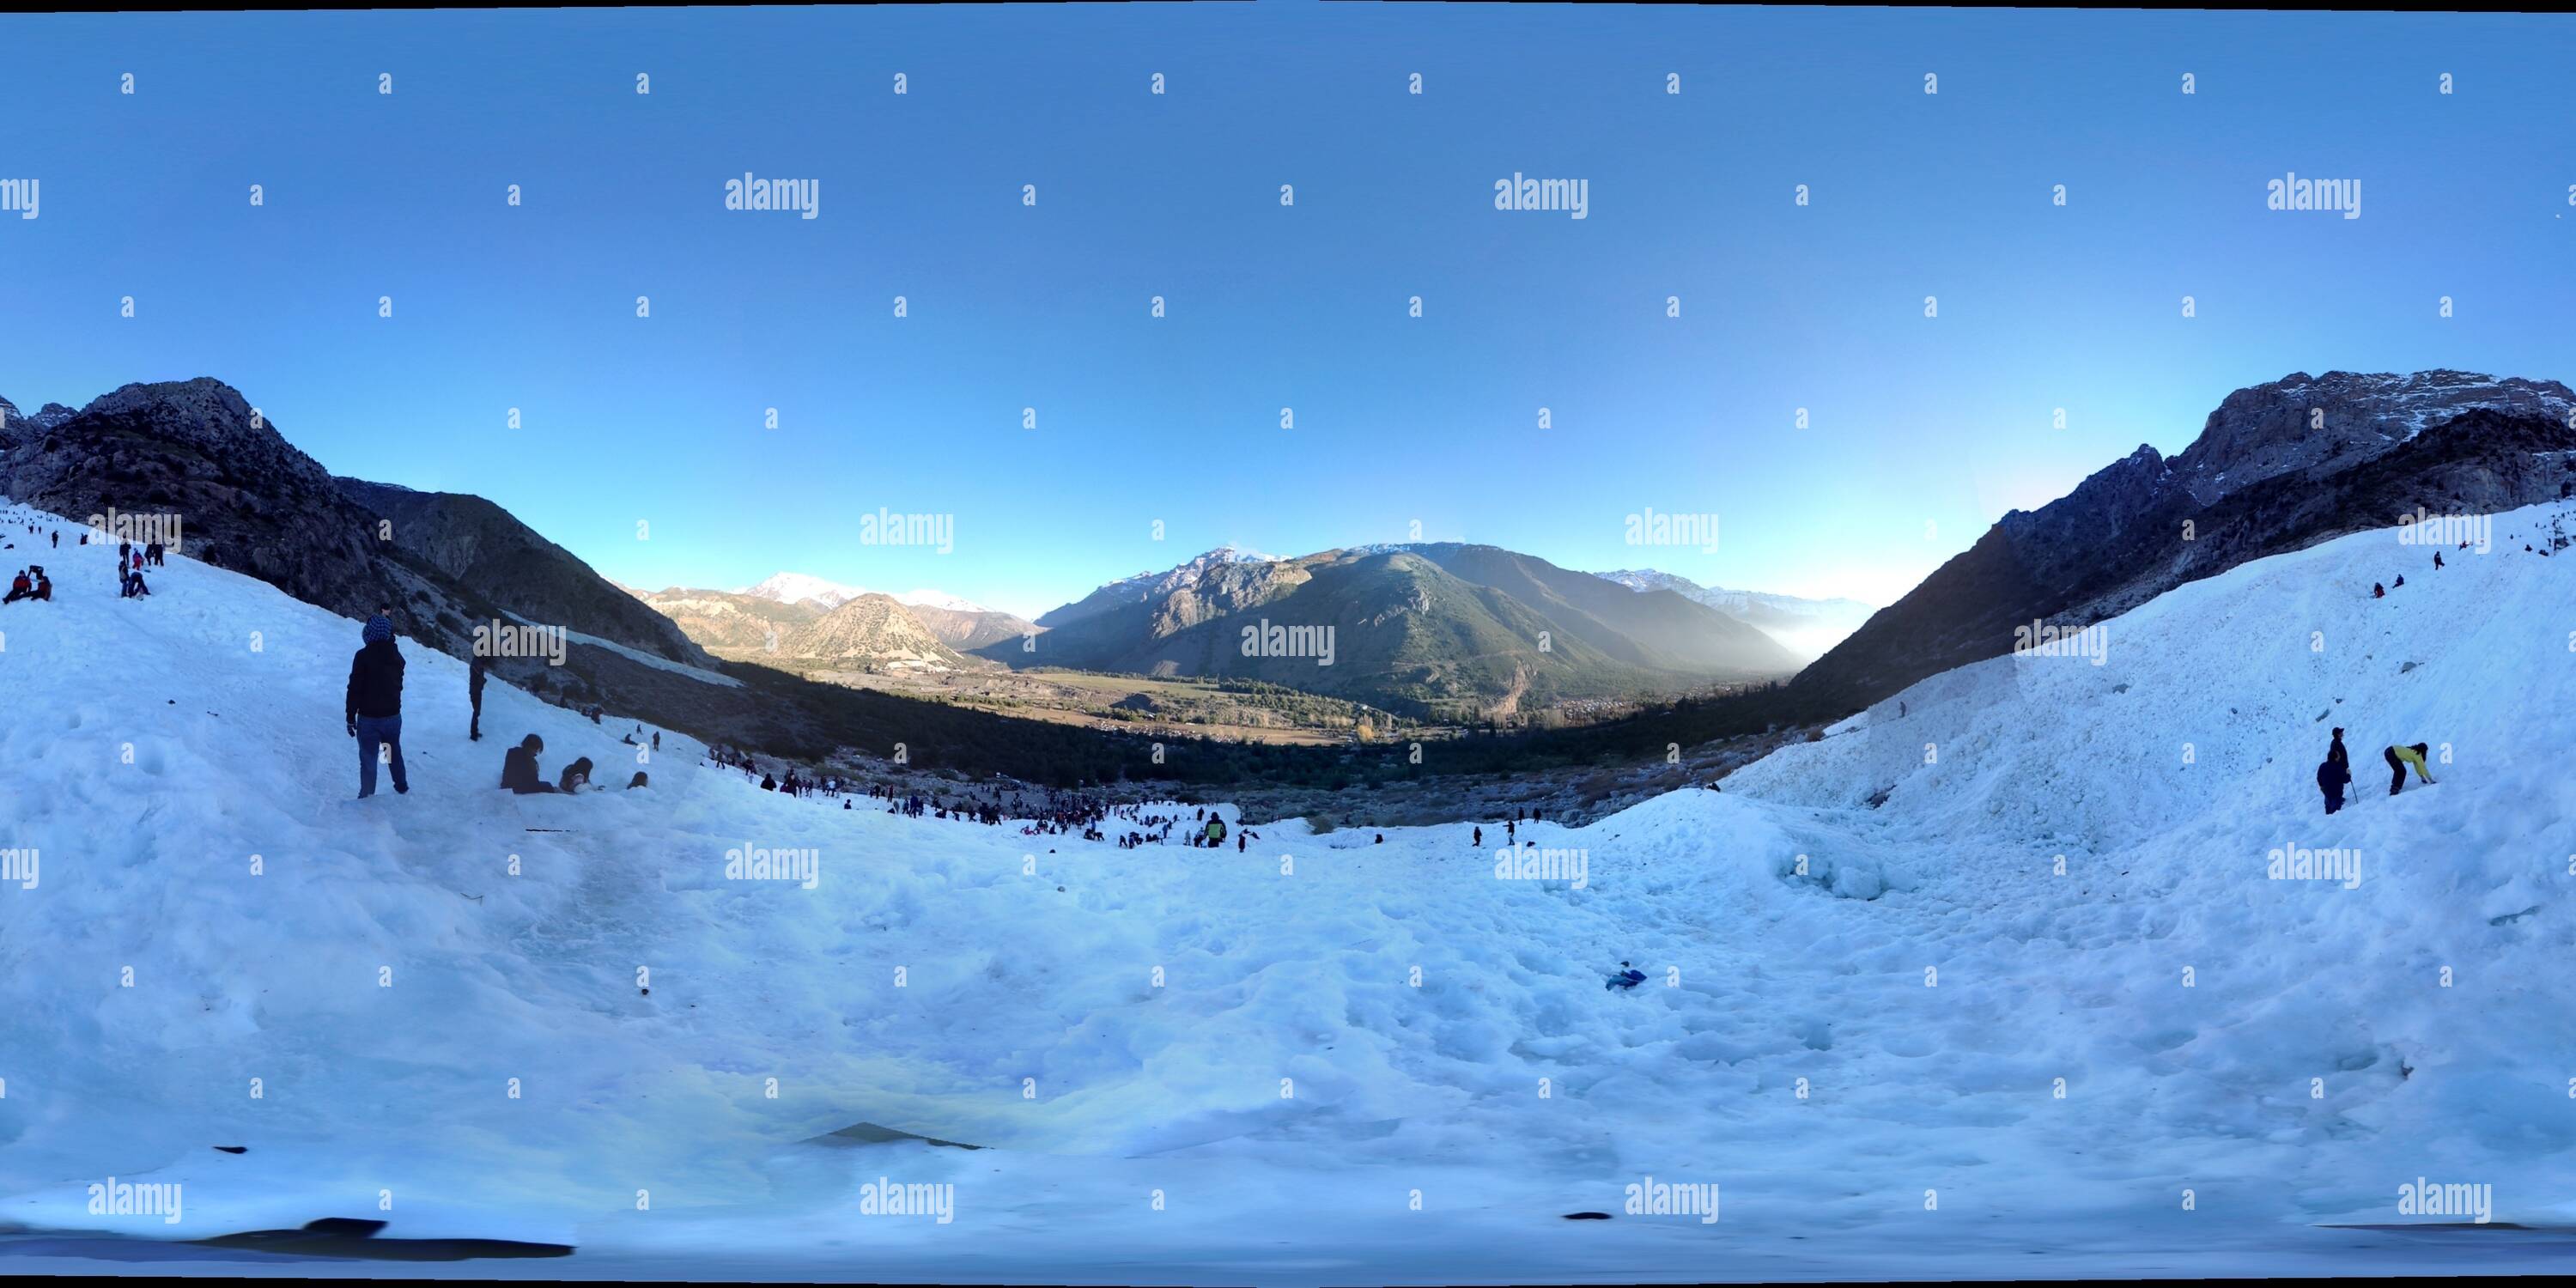 360 degree panoramic view of Cajon del Maipo Valley